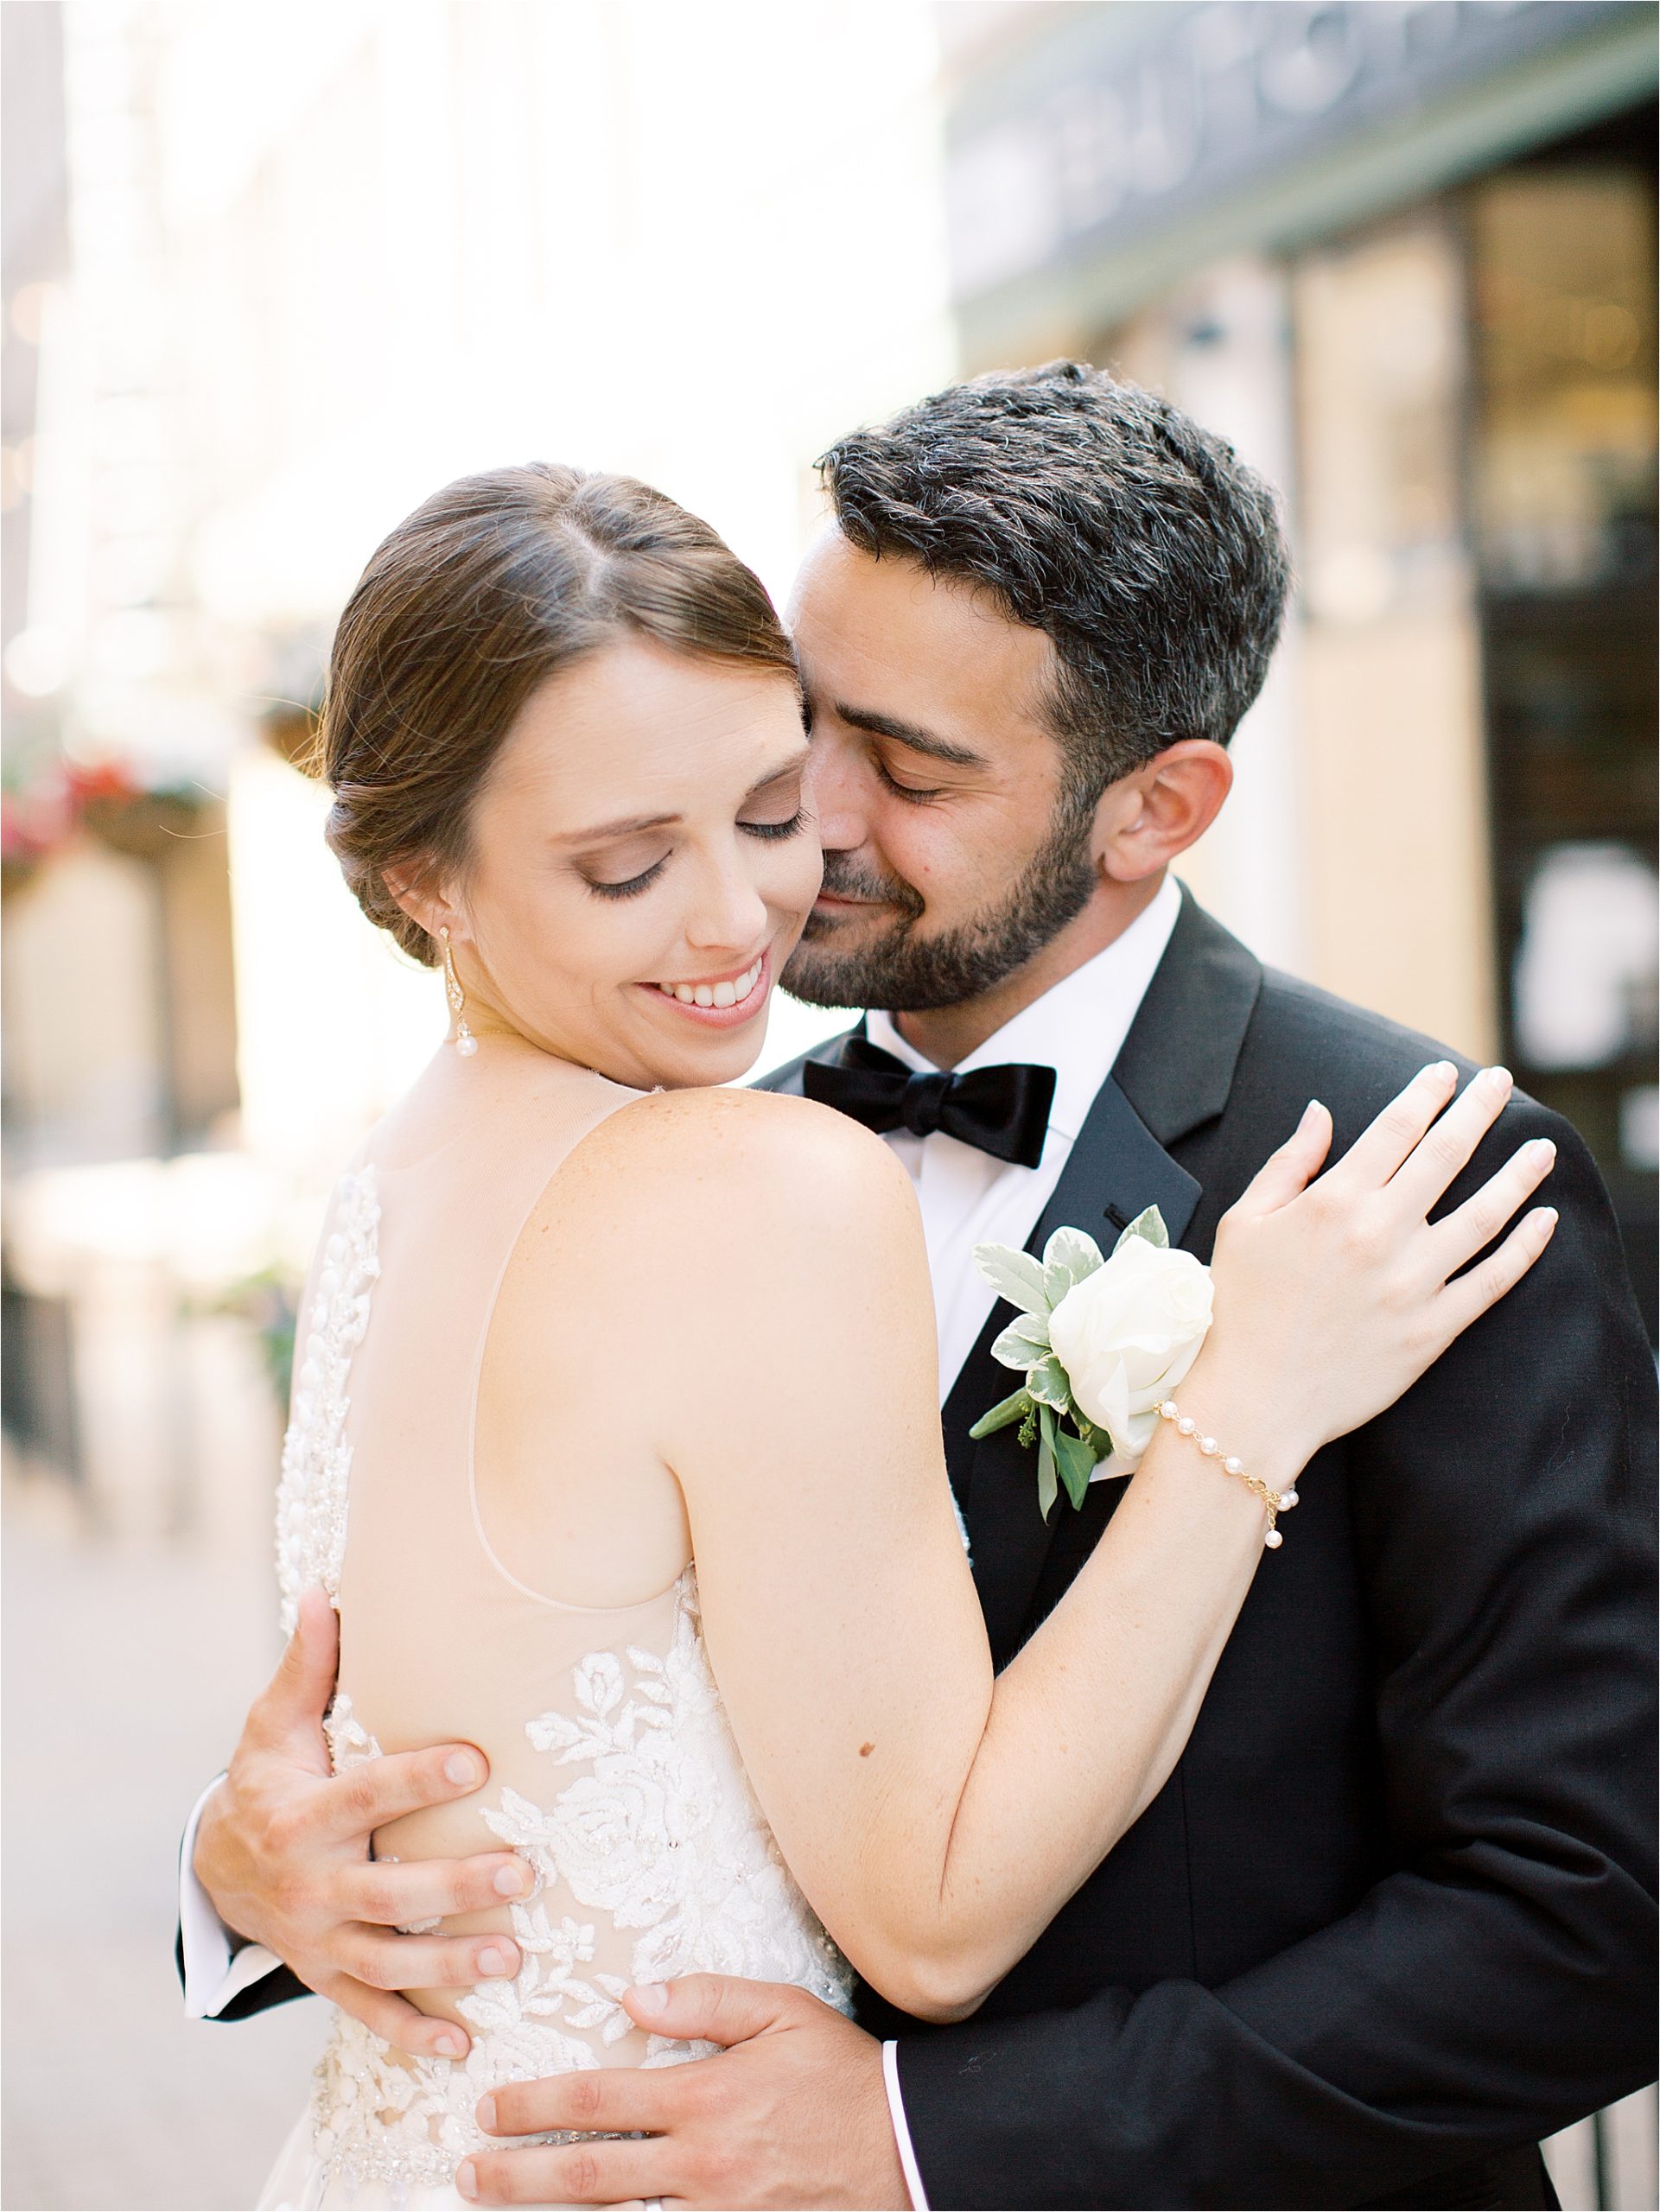 Romantic Cleveland Wedding by Austin & Rachel Photography